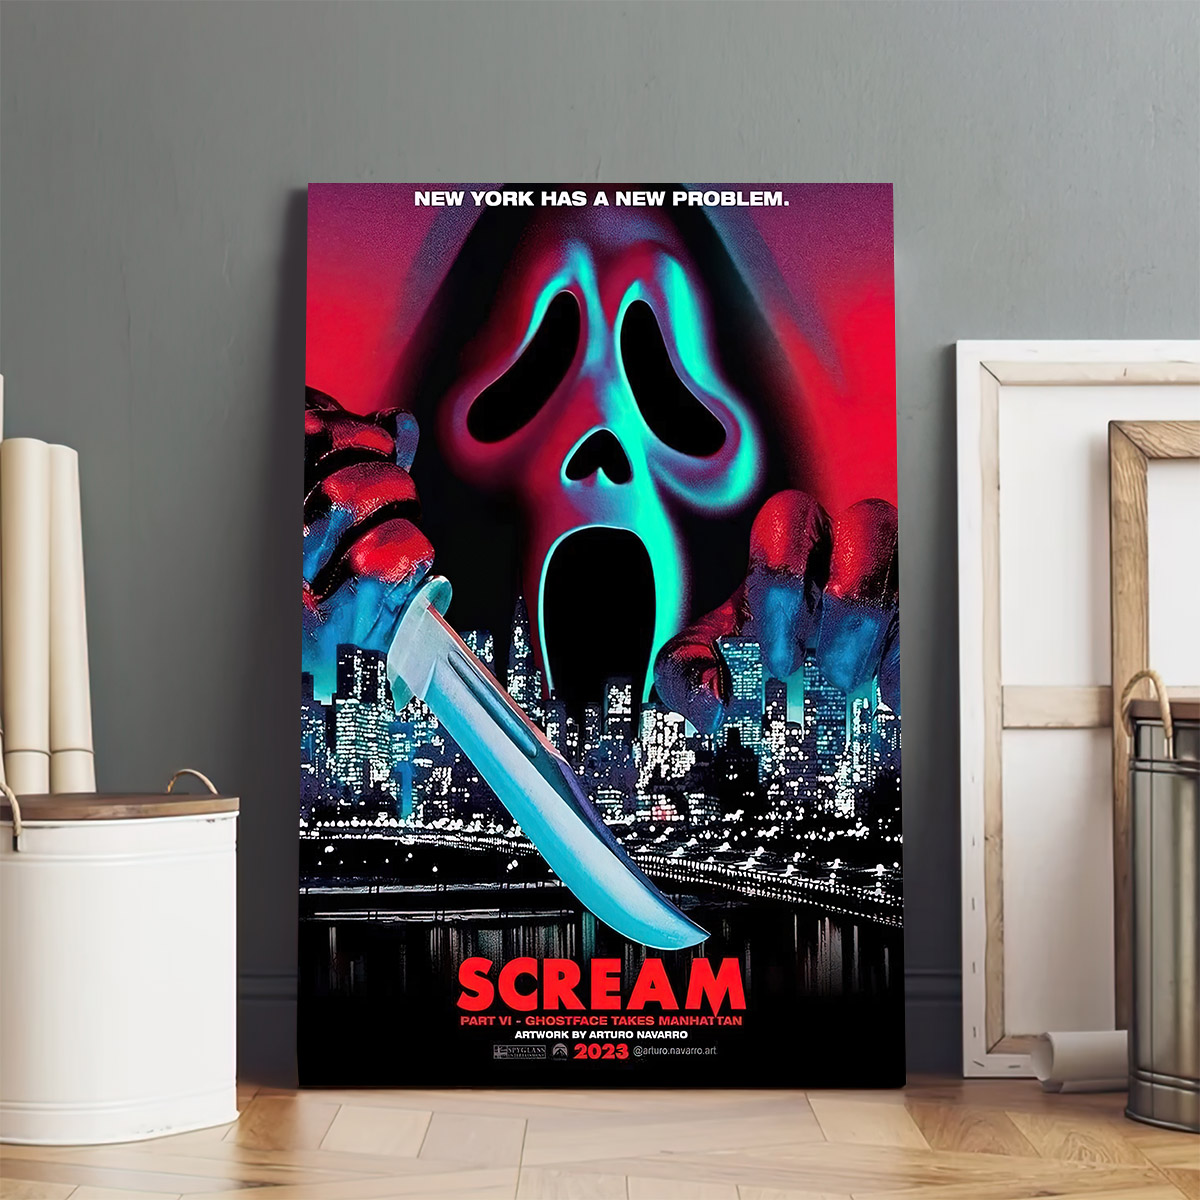 Scream VI Ghostface Takes Manhattan Poster Canvas Oopkzq